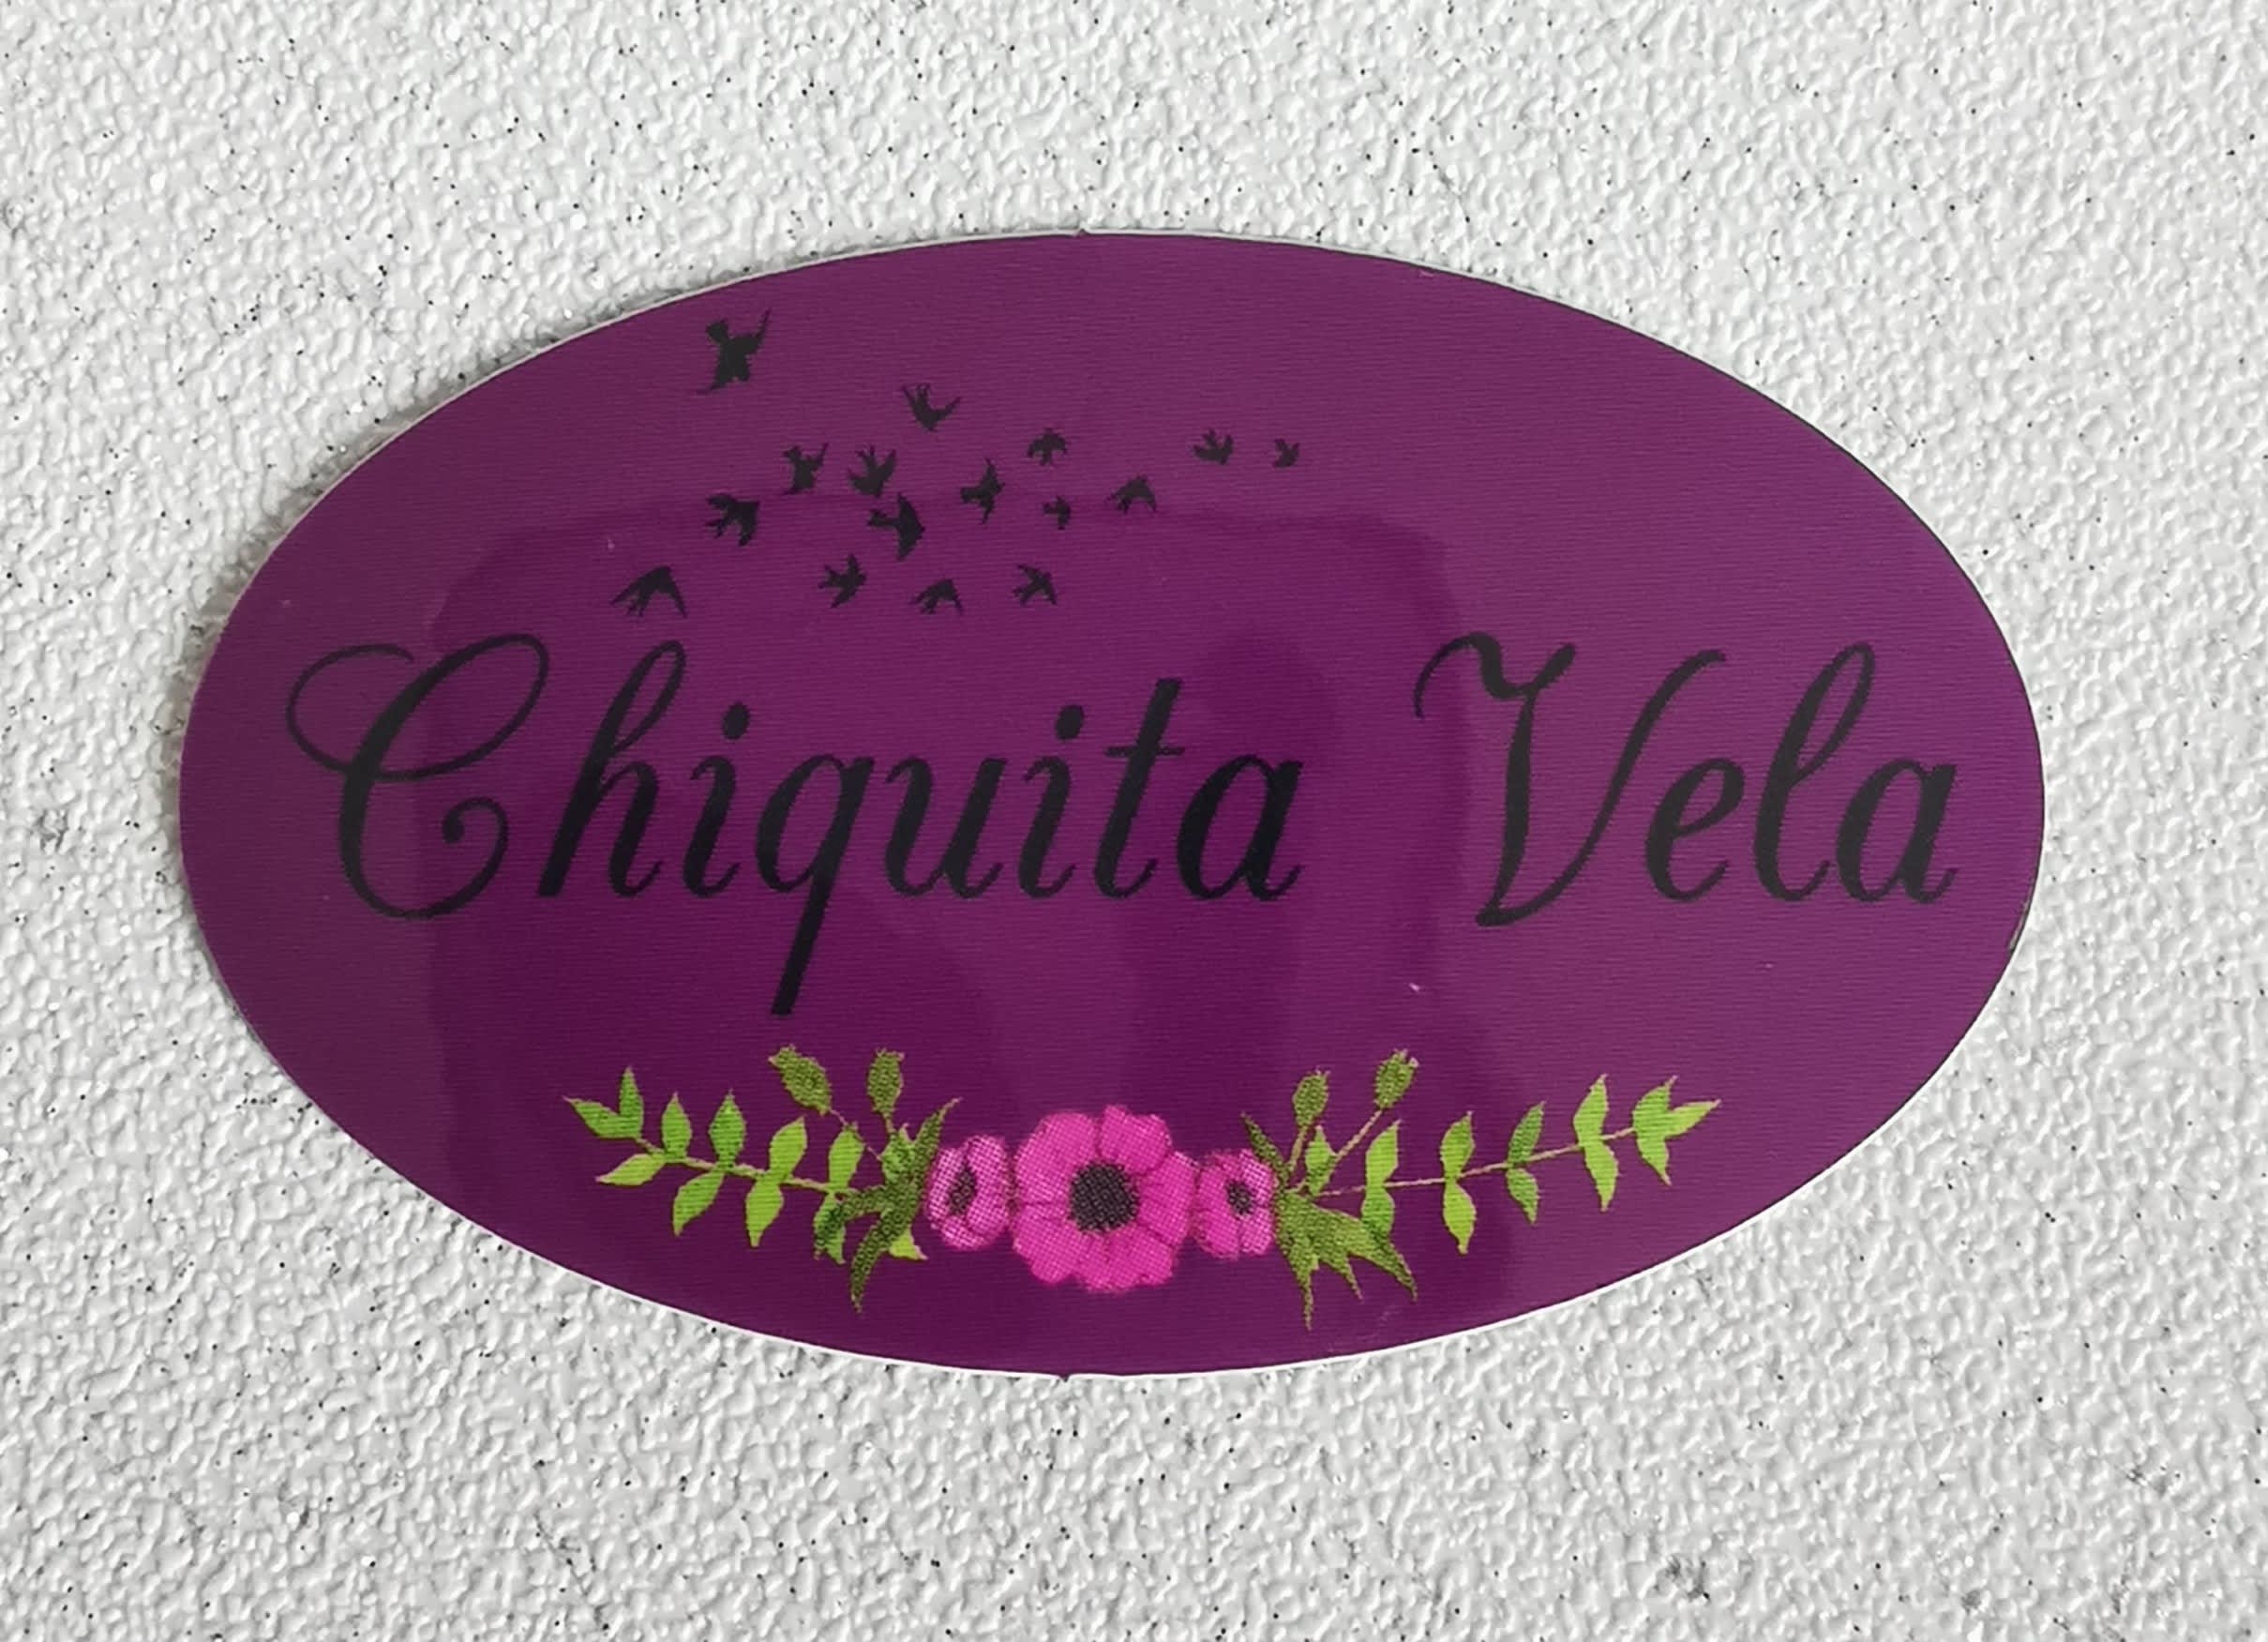 Chiquita Vela Candles